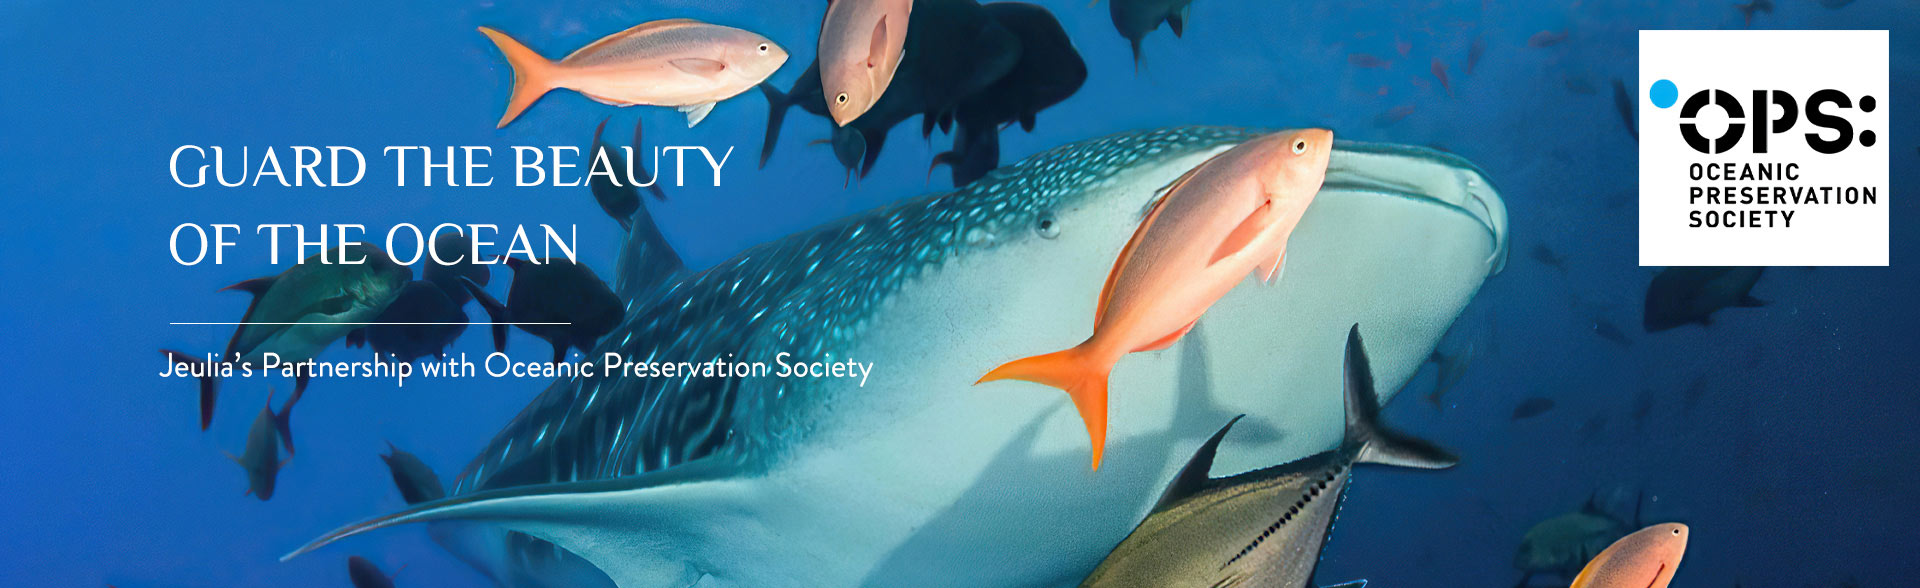 Jeulia's Partnership with Oceanic Preservation Society